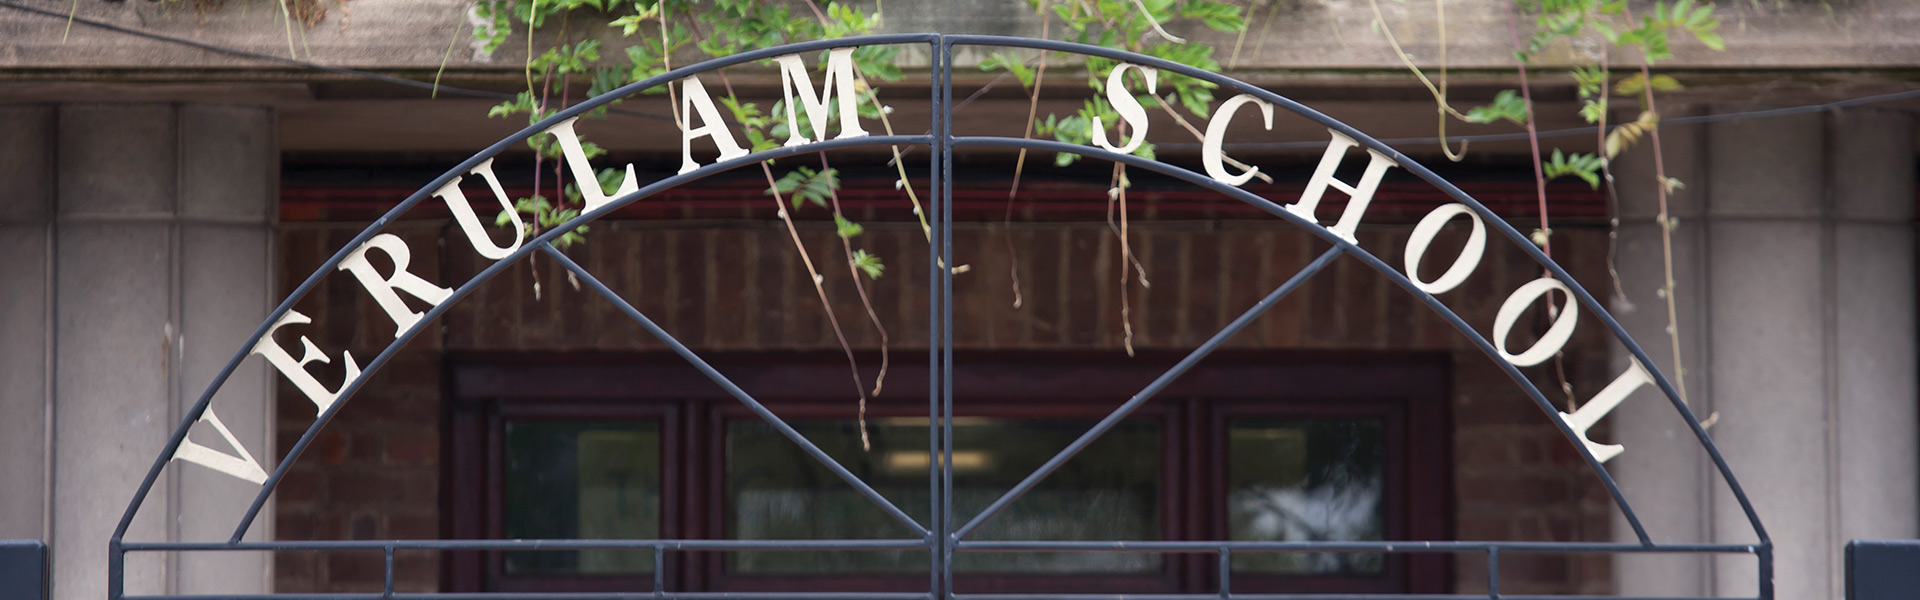 the words 'verulam school' in wrought iron above school gates.